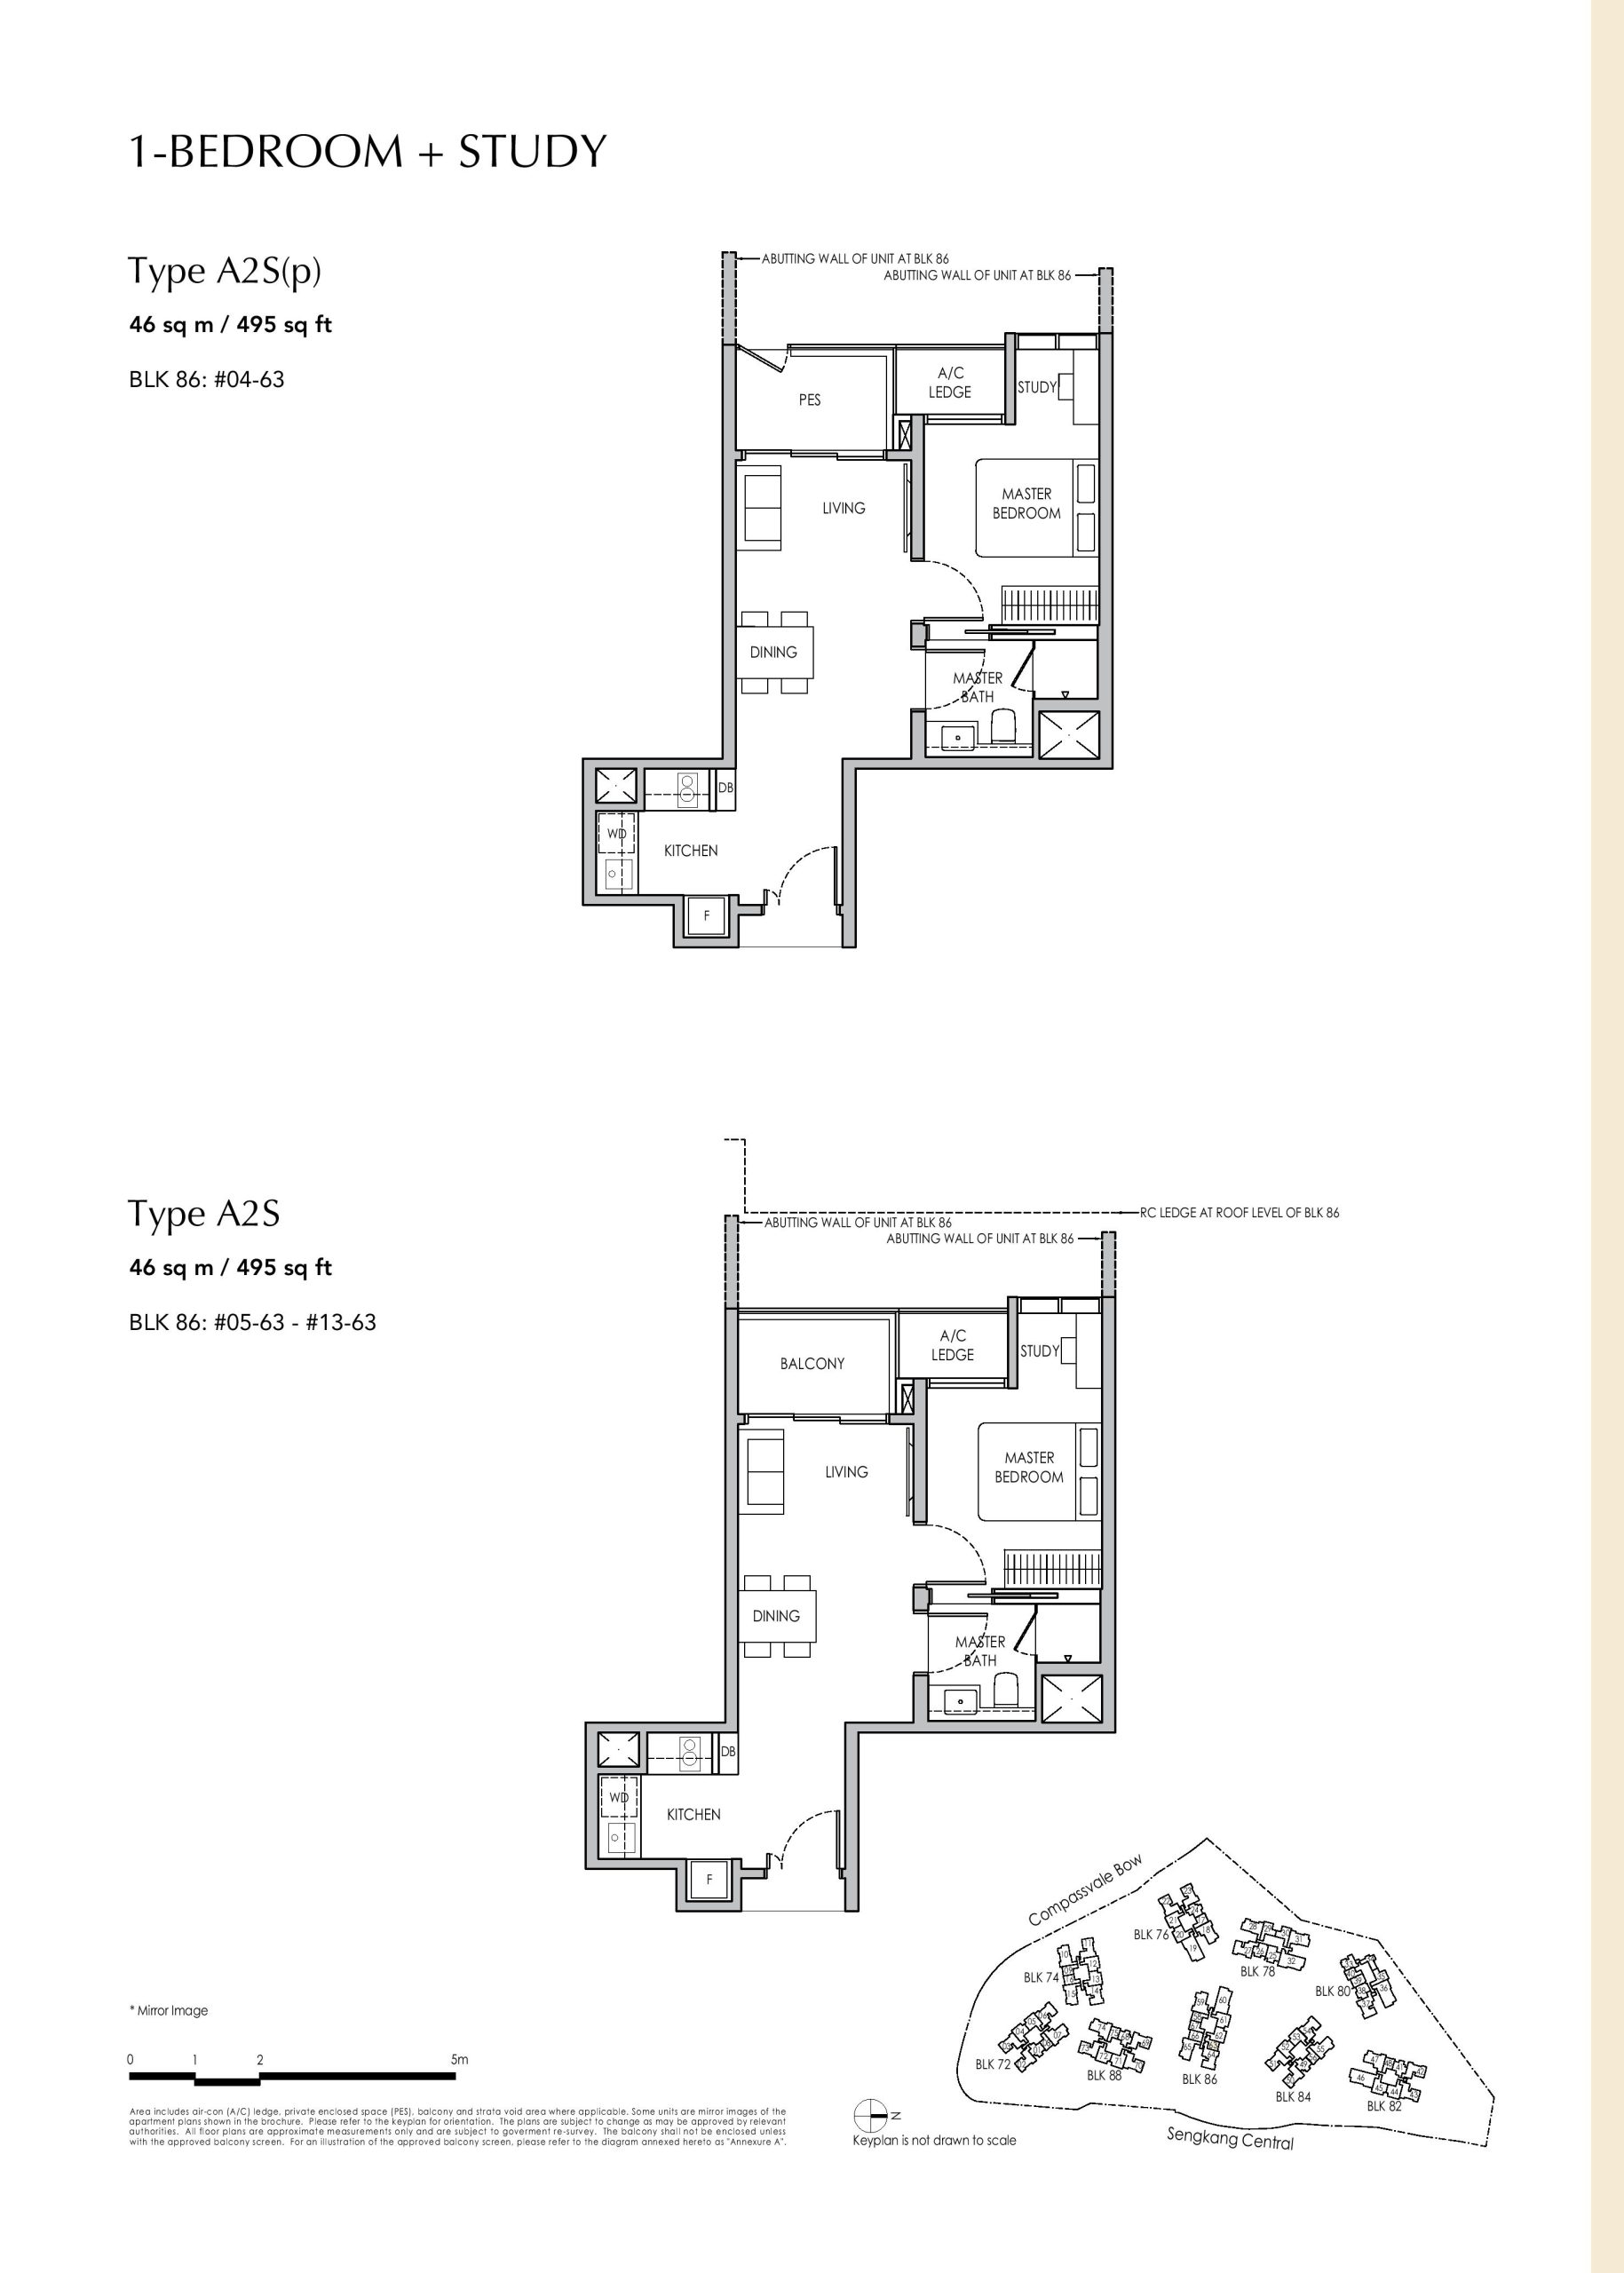 Sengkang Grand Residences 1 Bedroom + Study Type A2S(p), A2S Floor Plans